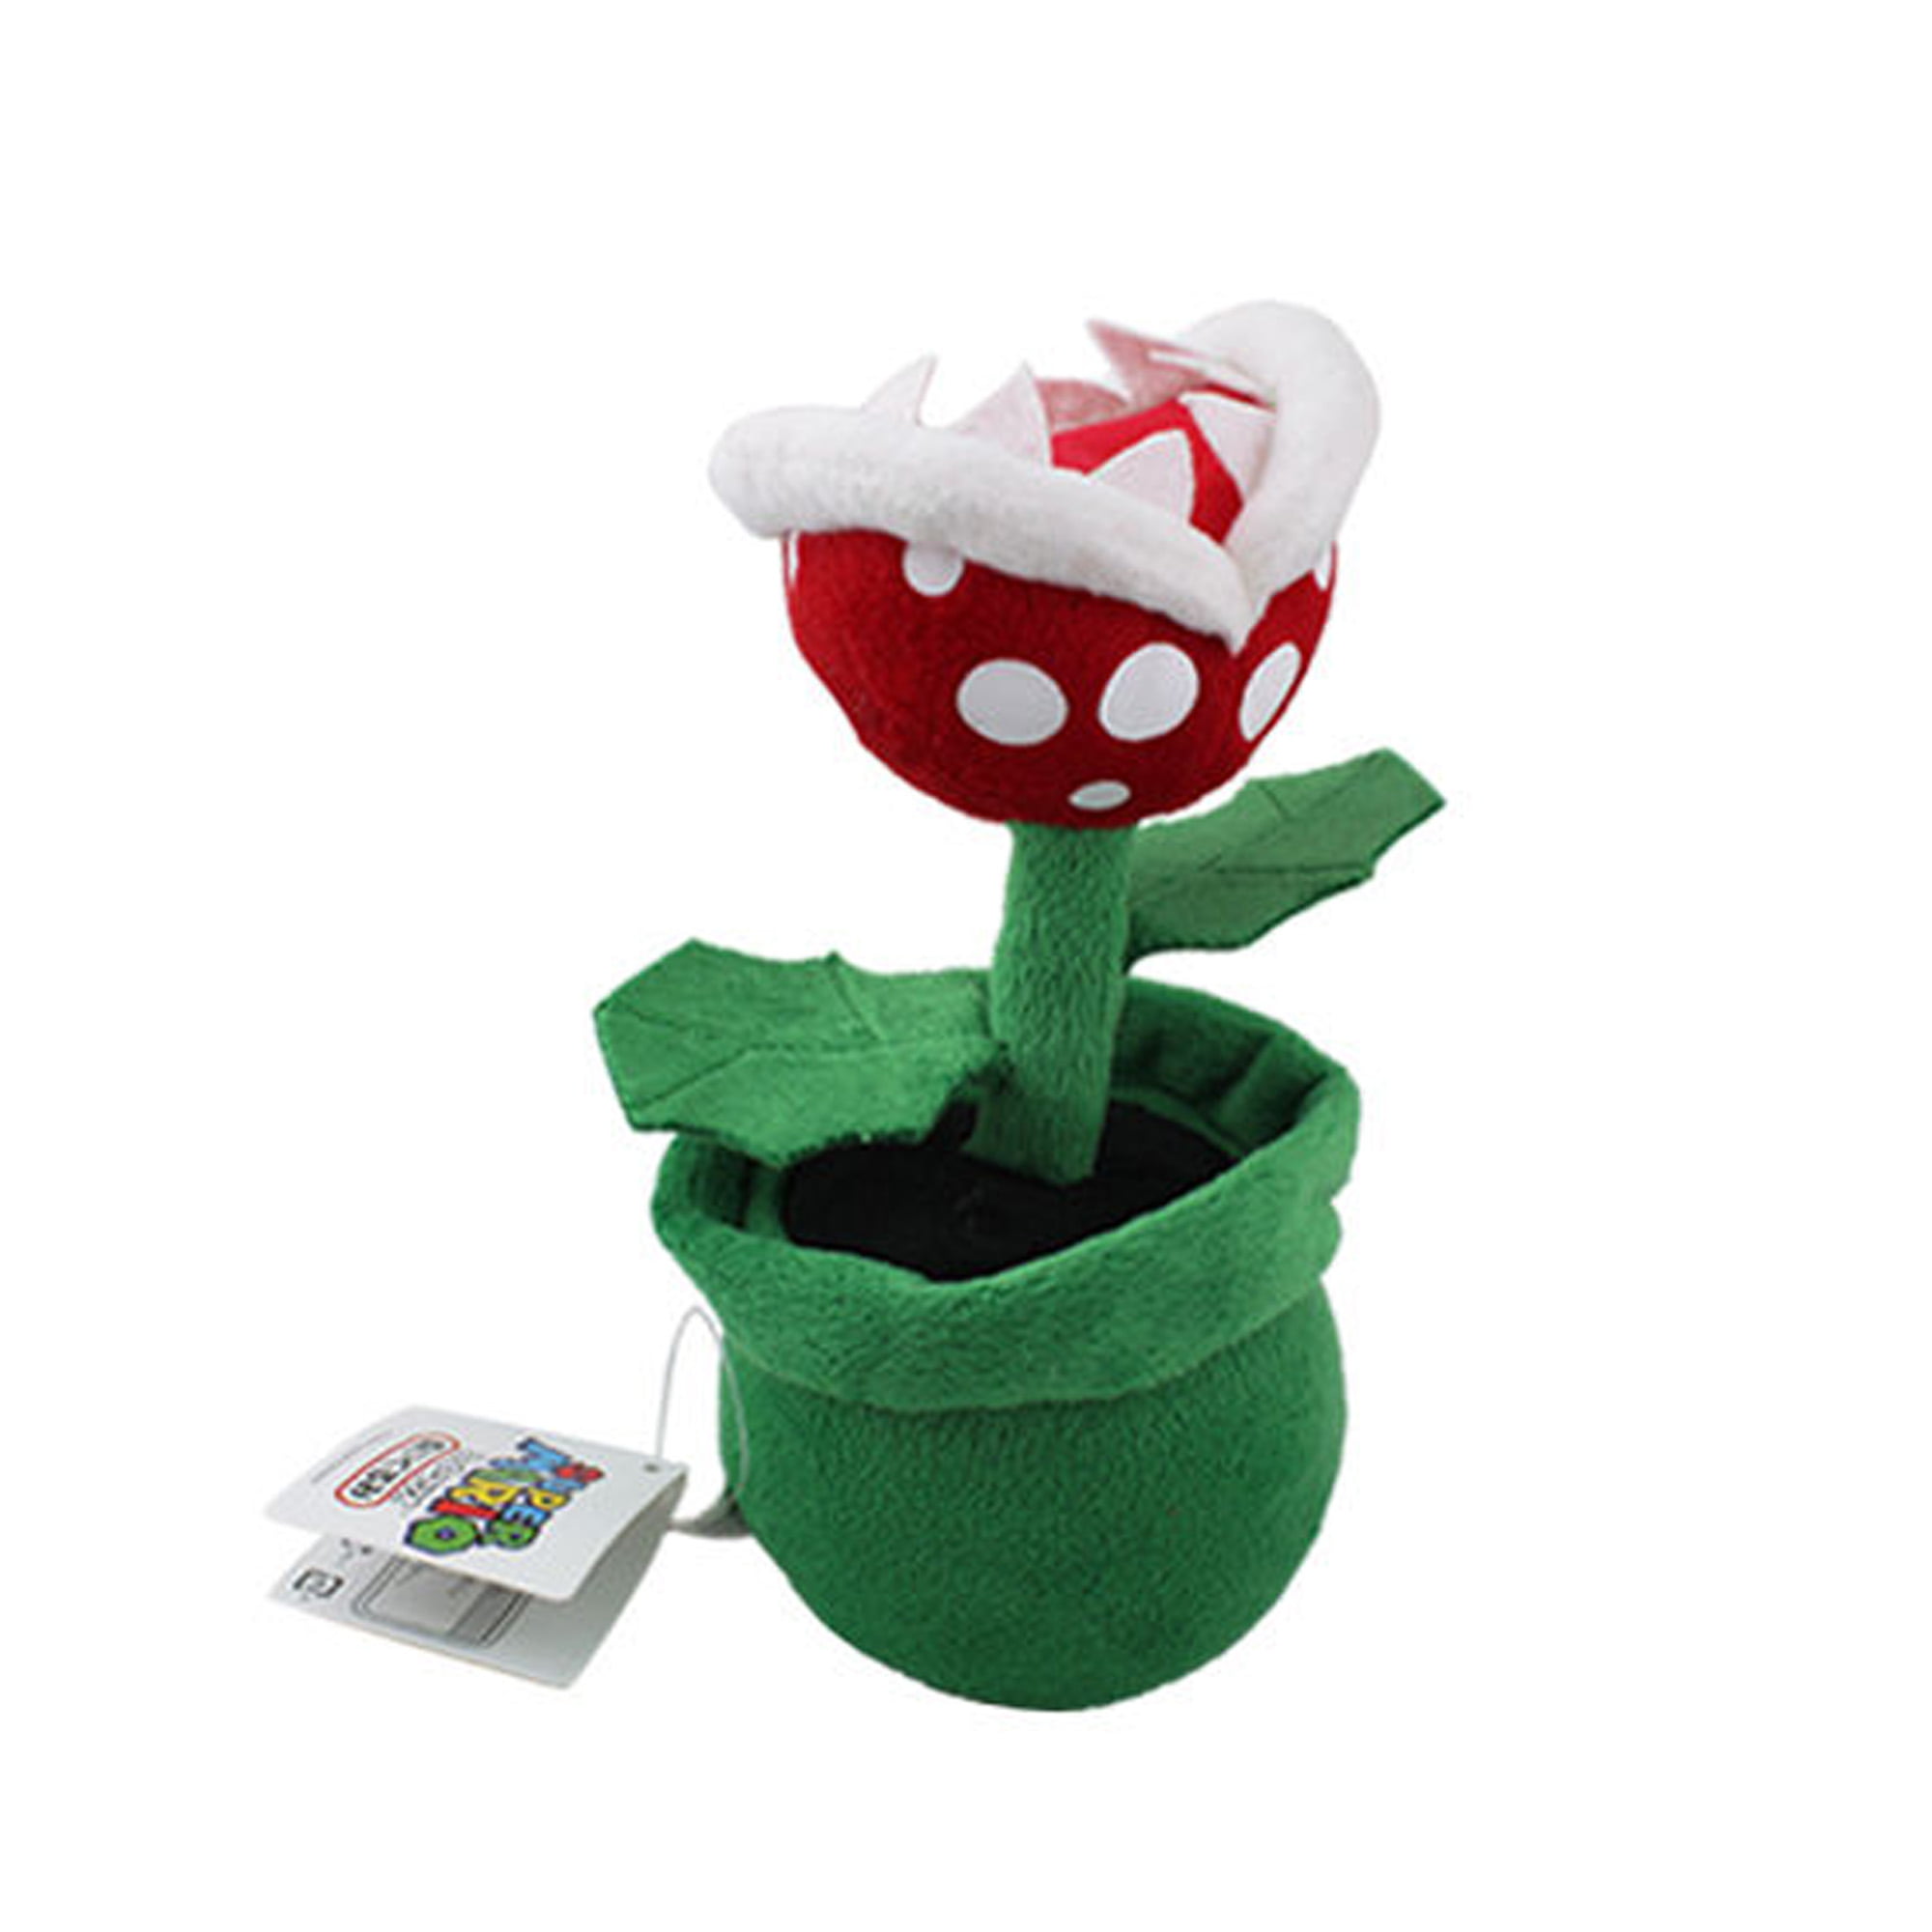 New Super Mario Bros Piranha Plant Plush Soft Toy Doll Teddy Stuffed Animal 8"